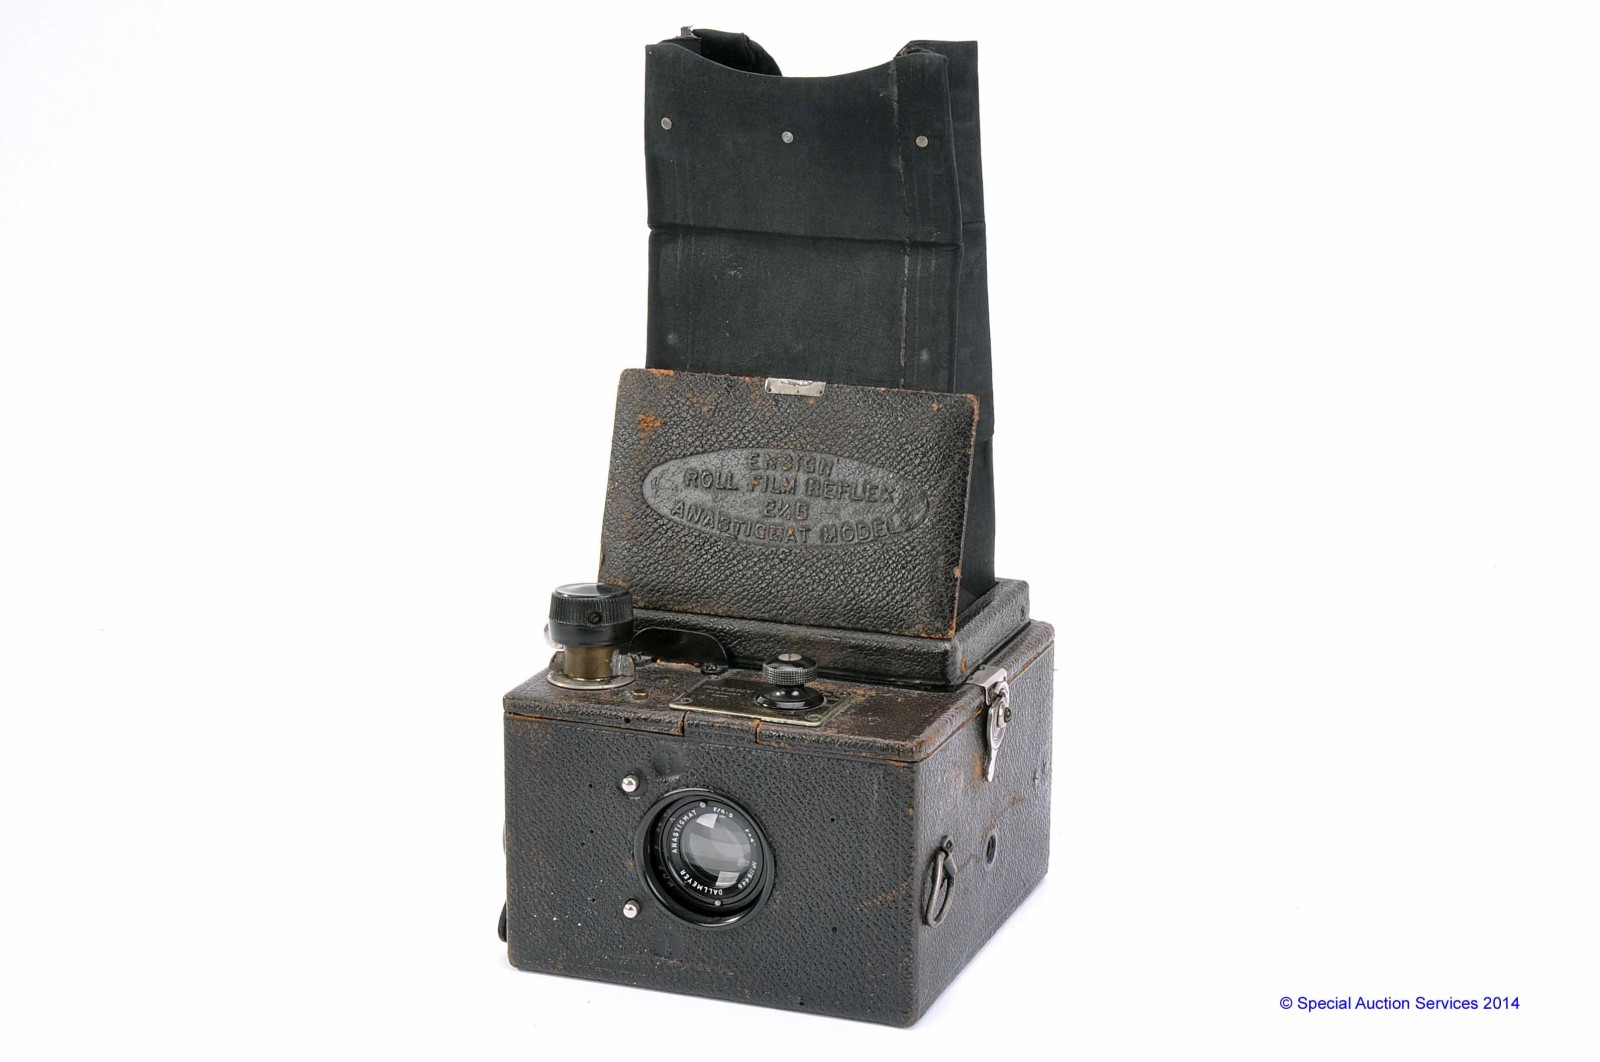 A Ensign Roll Film Reflex 2 ¼ B Anastigmat Camera, with Dallmeyer f/4.5 4" lens, serial no.